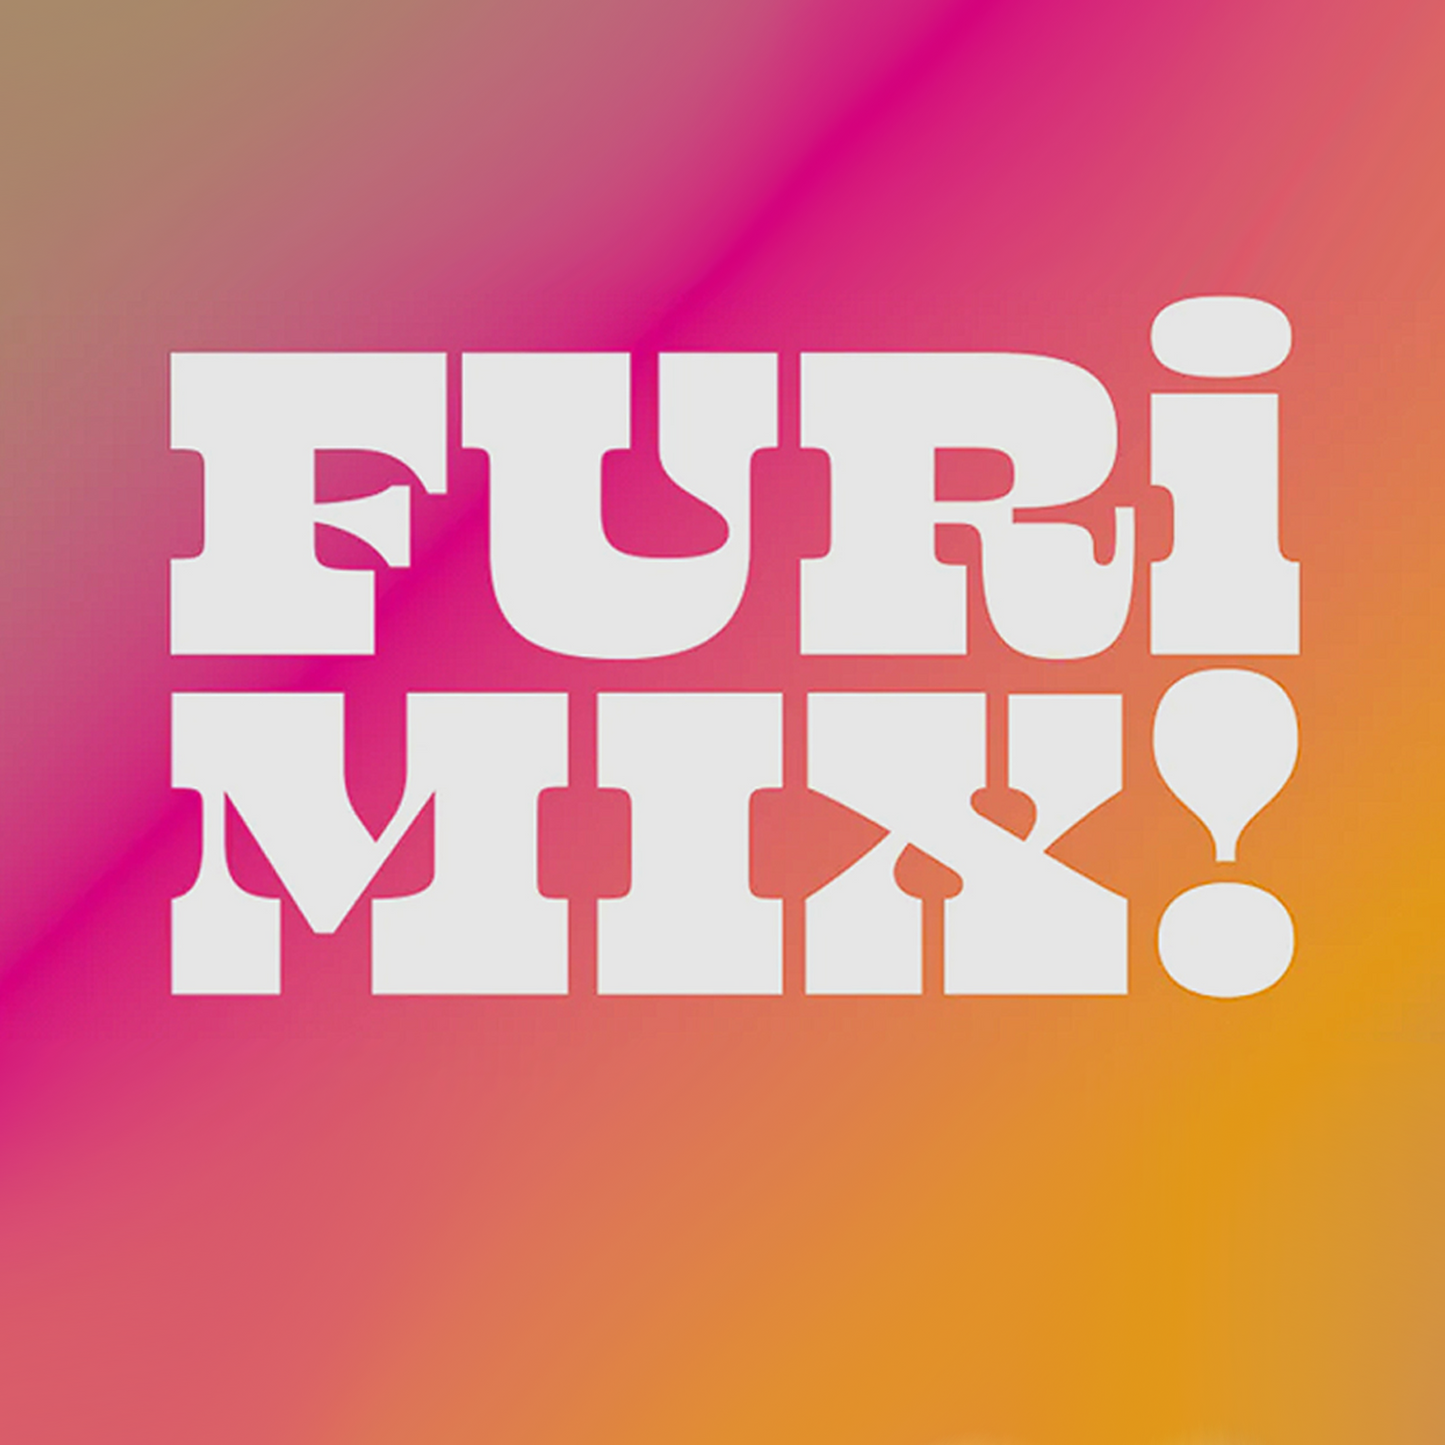 Furimix - Furikake Hawaiian Popcorn 5.oz (Box of 5)